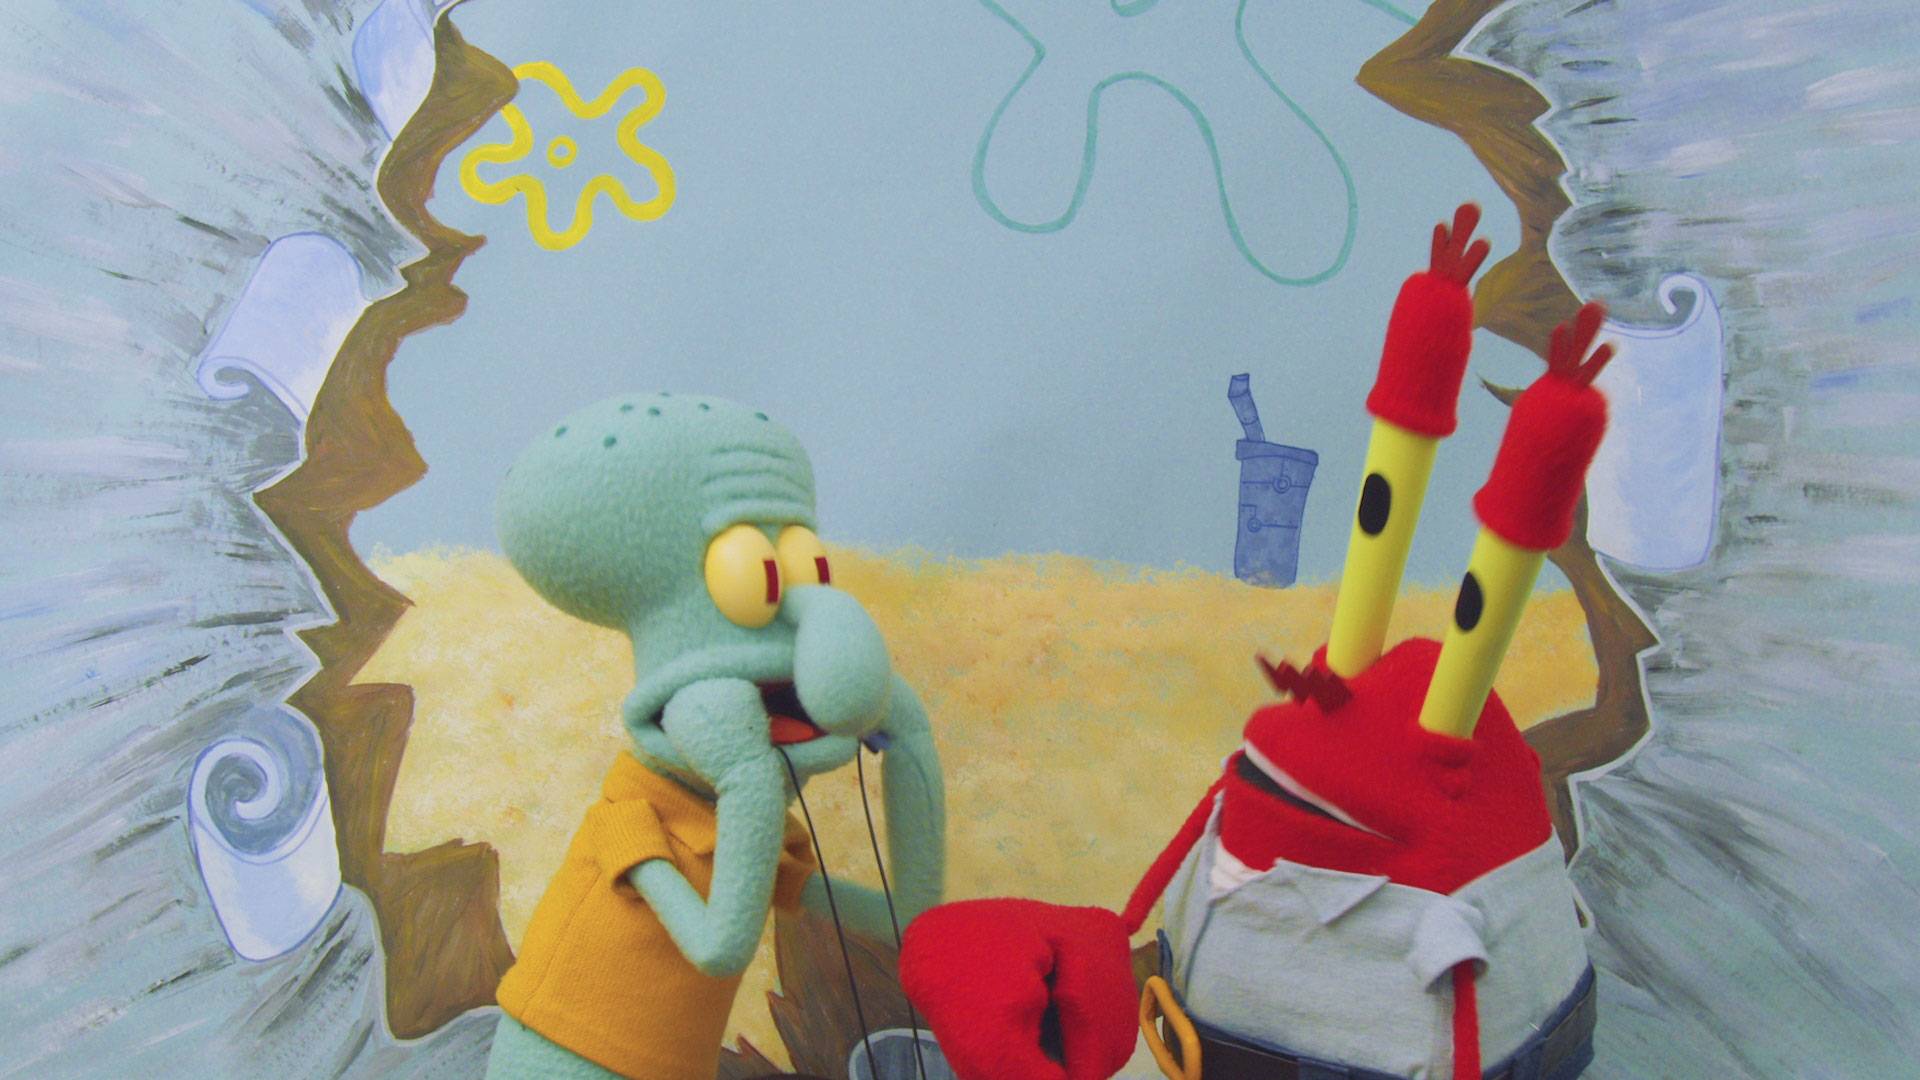 spongebob stinky sound effect Best Sound Alert Memes